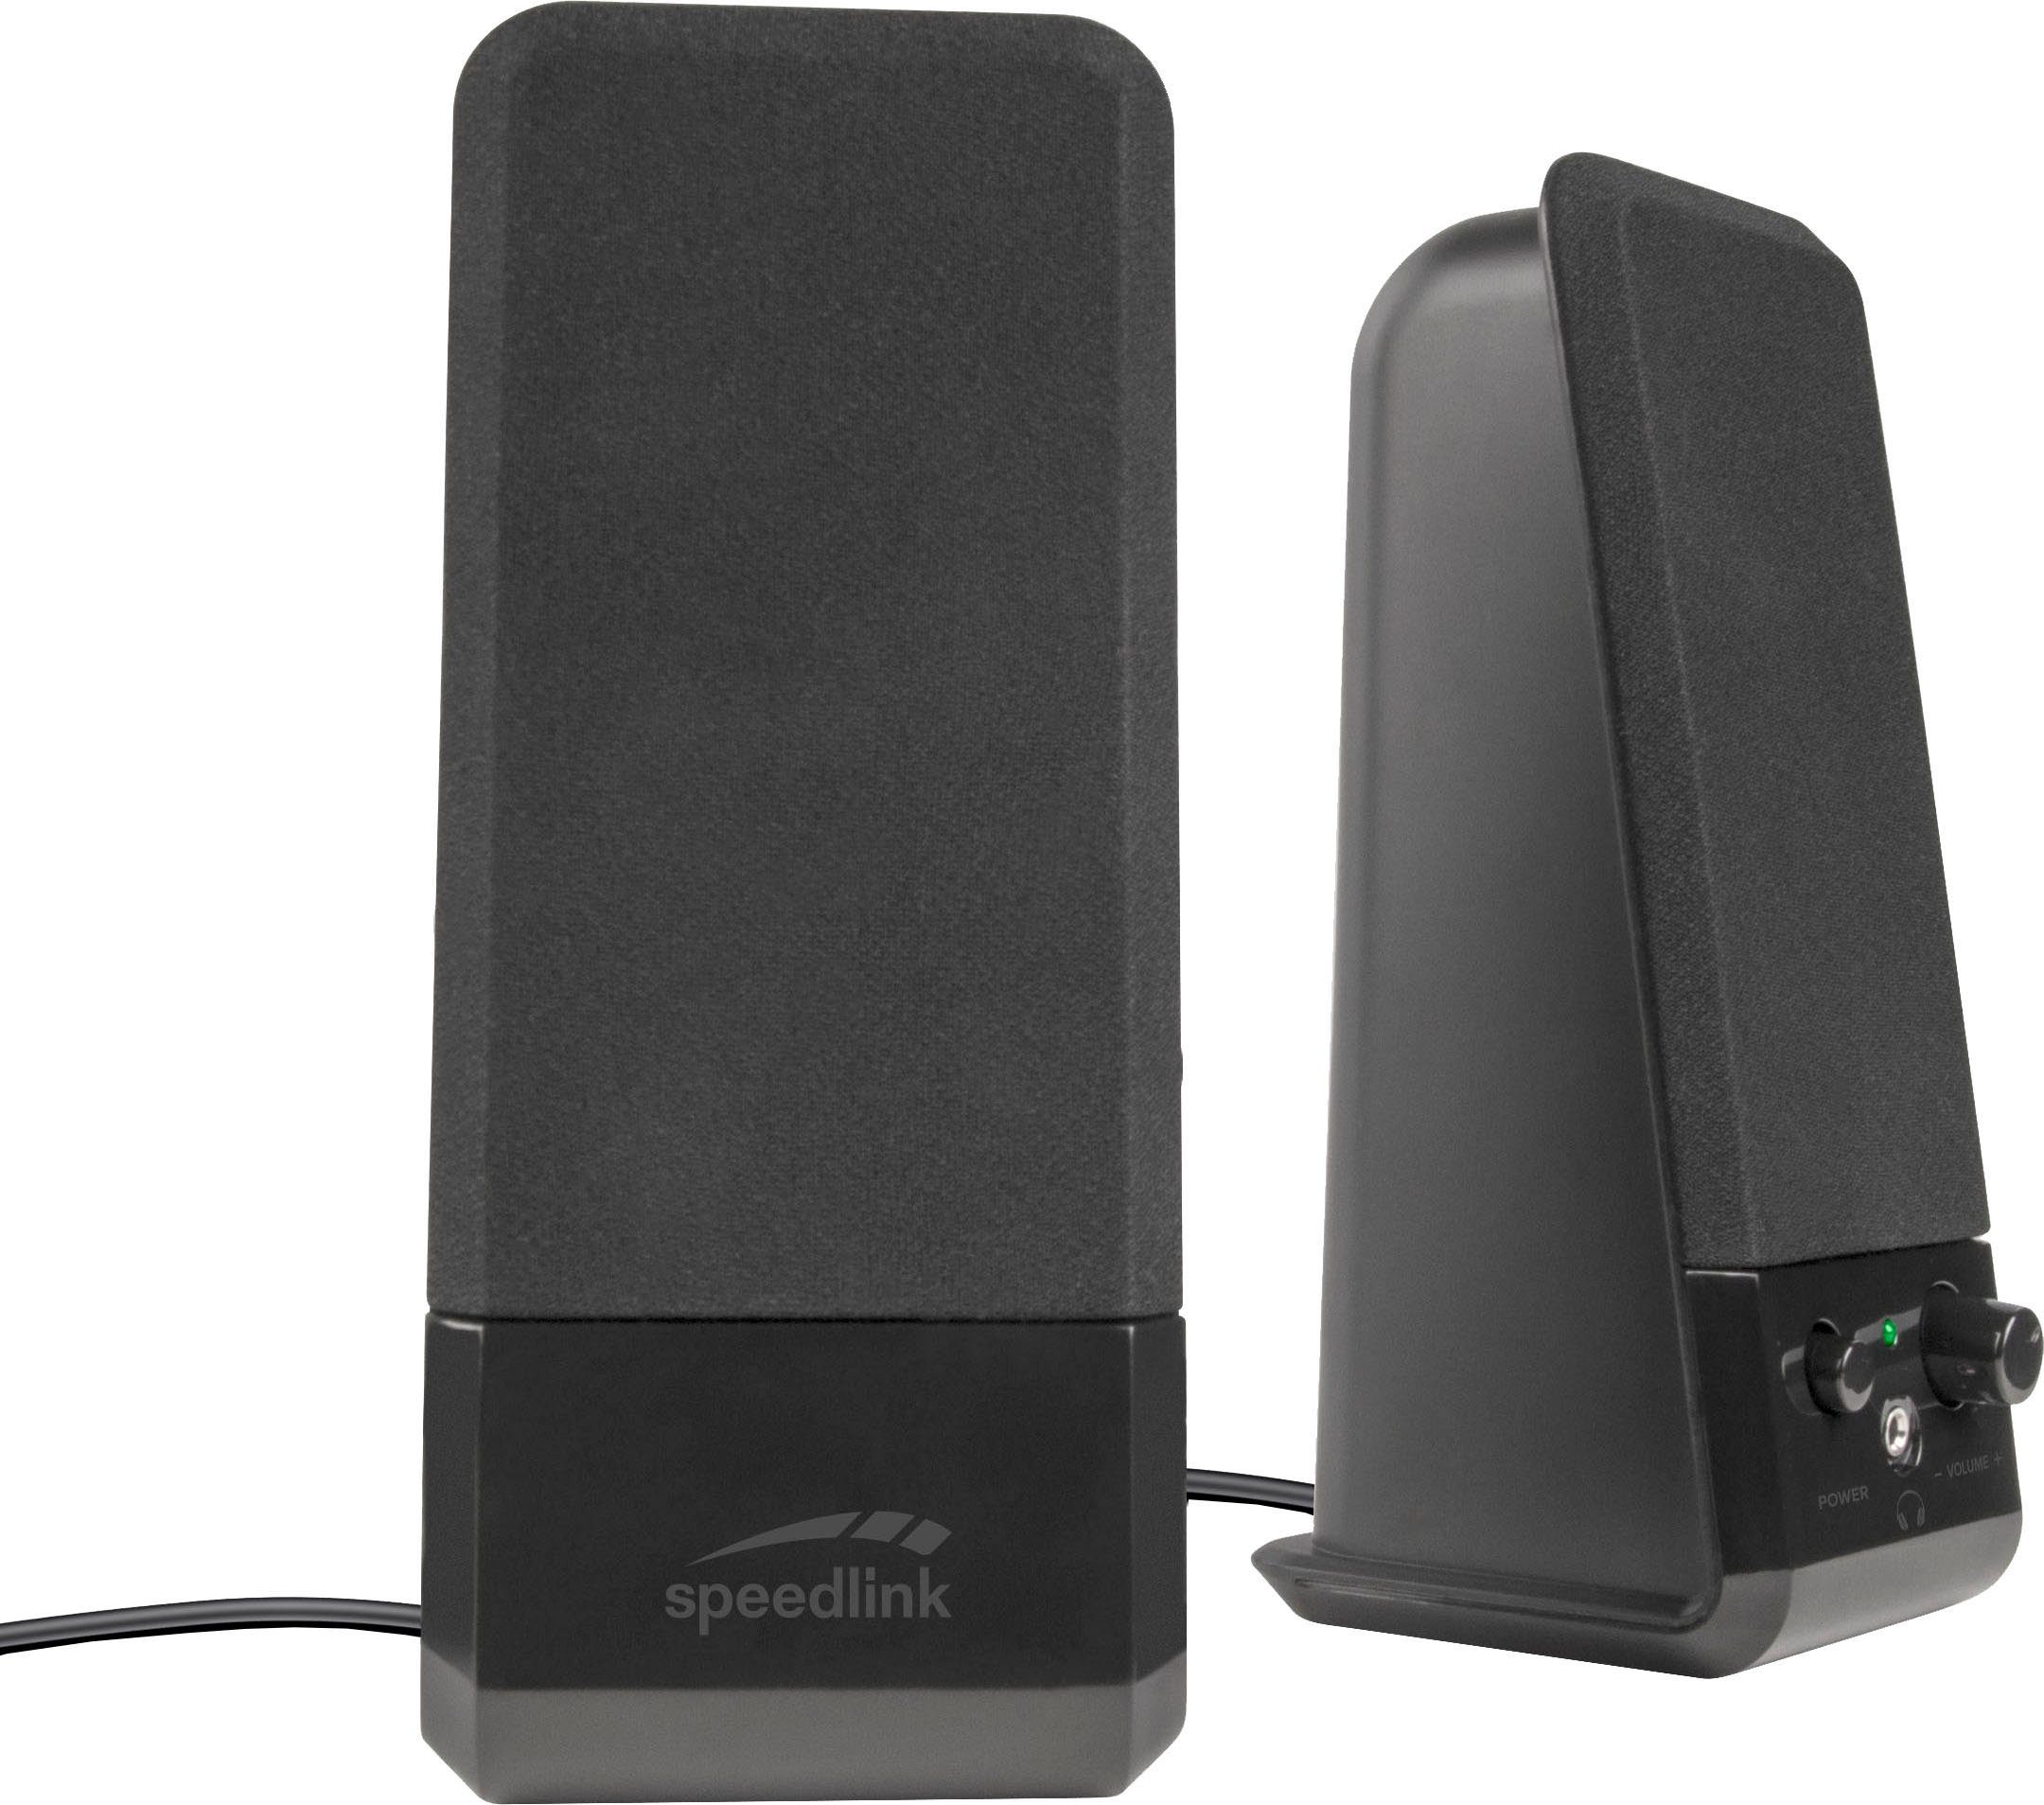 Speedlink EVENT Stereo (5 W) PC-Lautsprecher